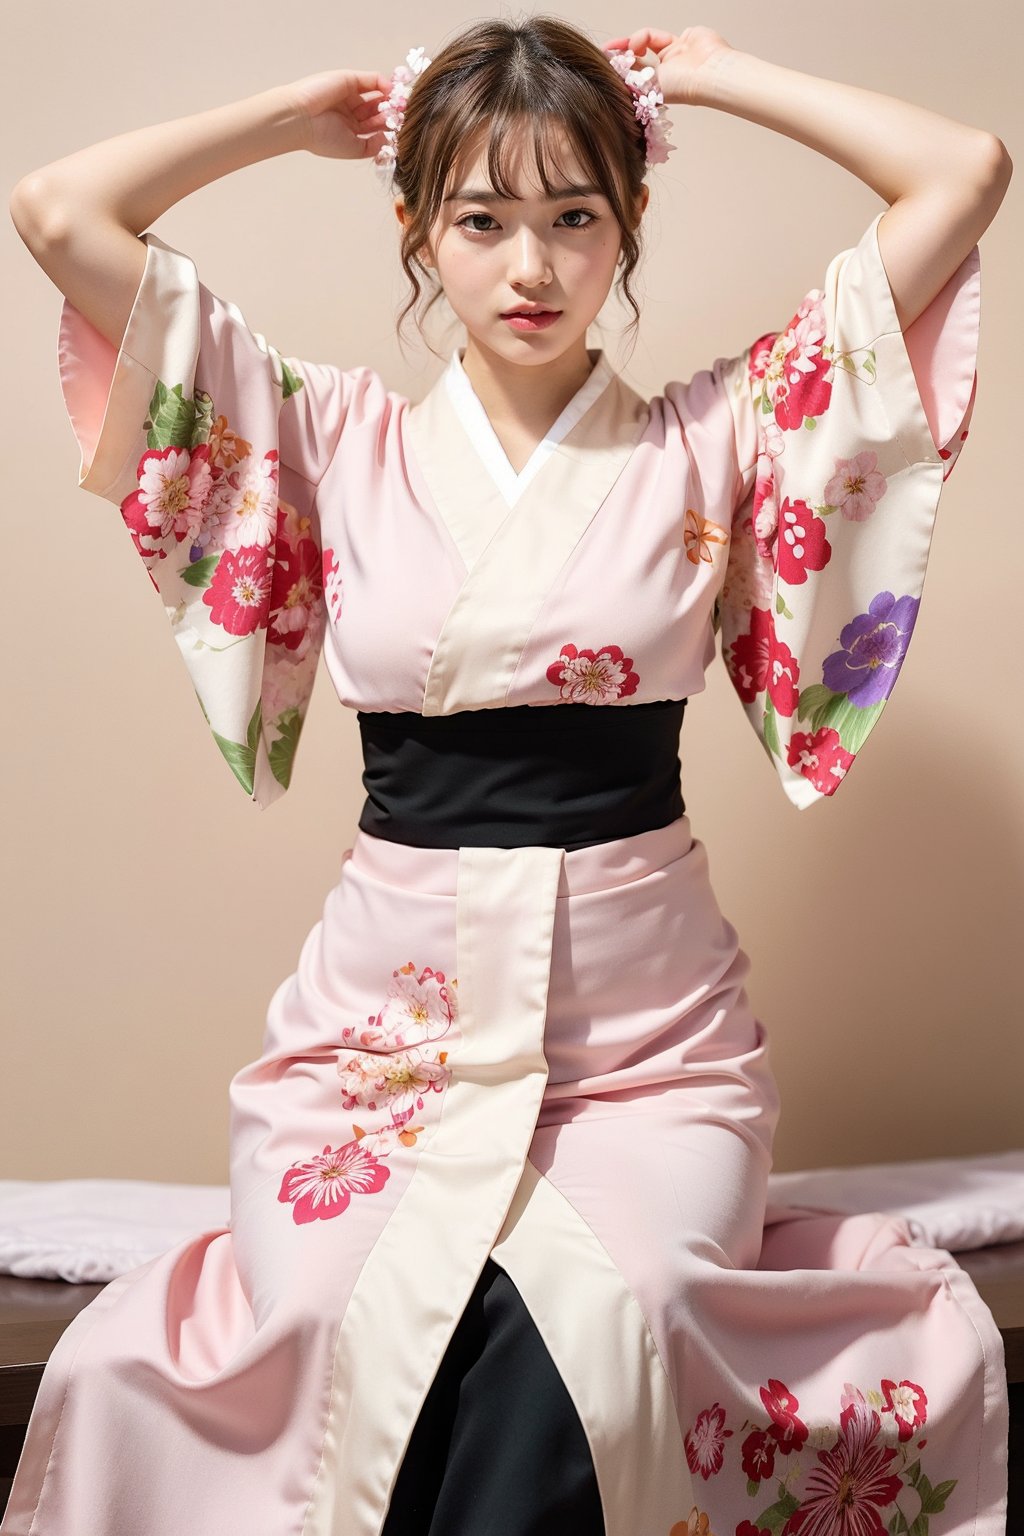 Thai girl 22 year old, blond sleek pixie short hair style, wearing pastel pink kimono sakura flower, solid black color background